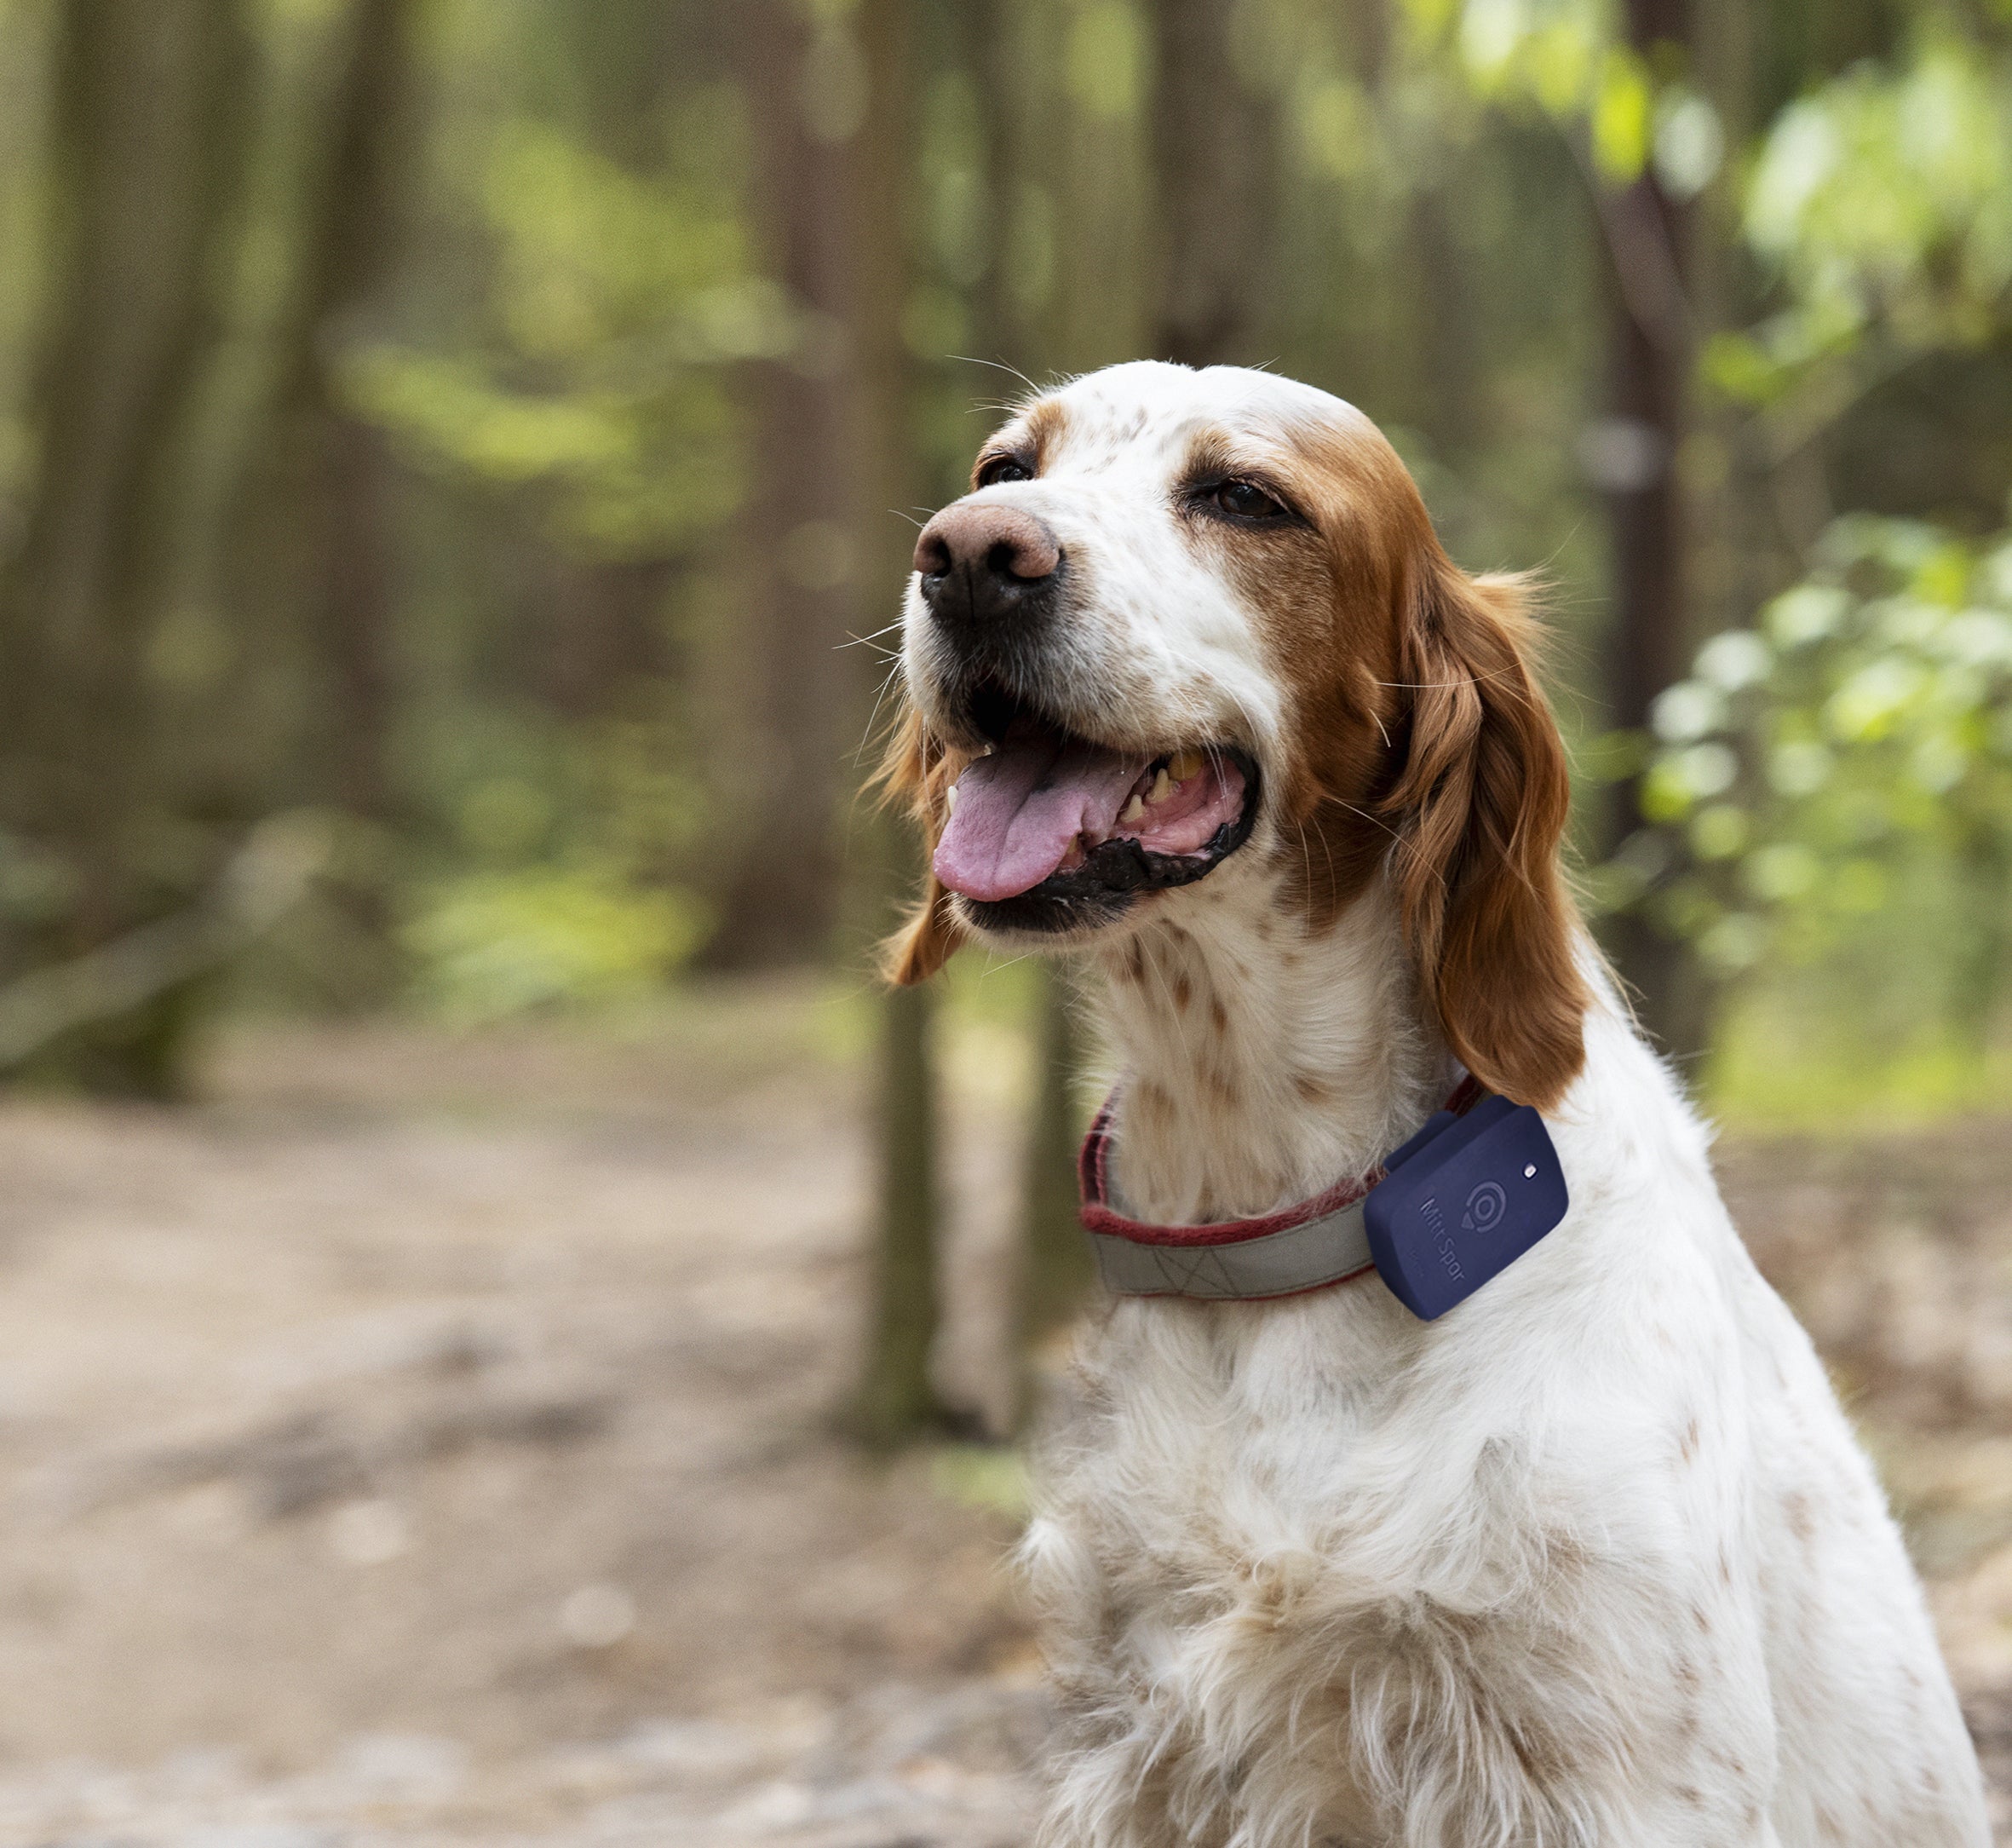 Mitt Spor – GPS-sporing for hund